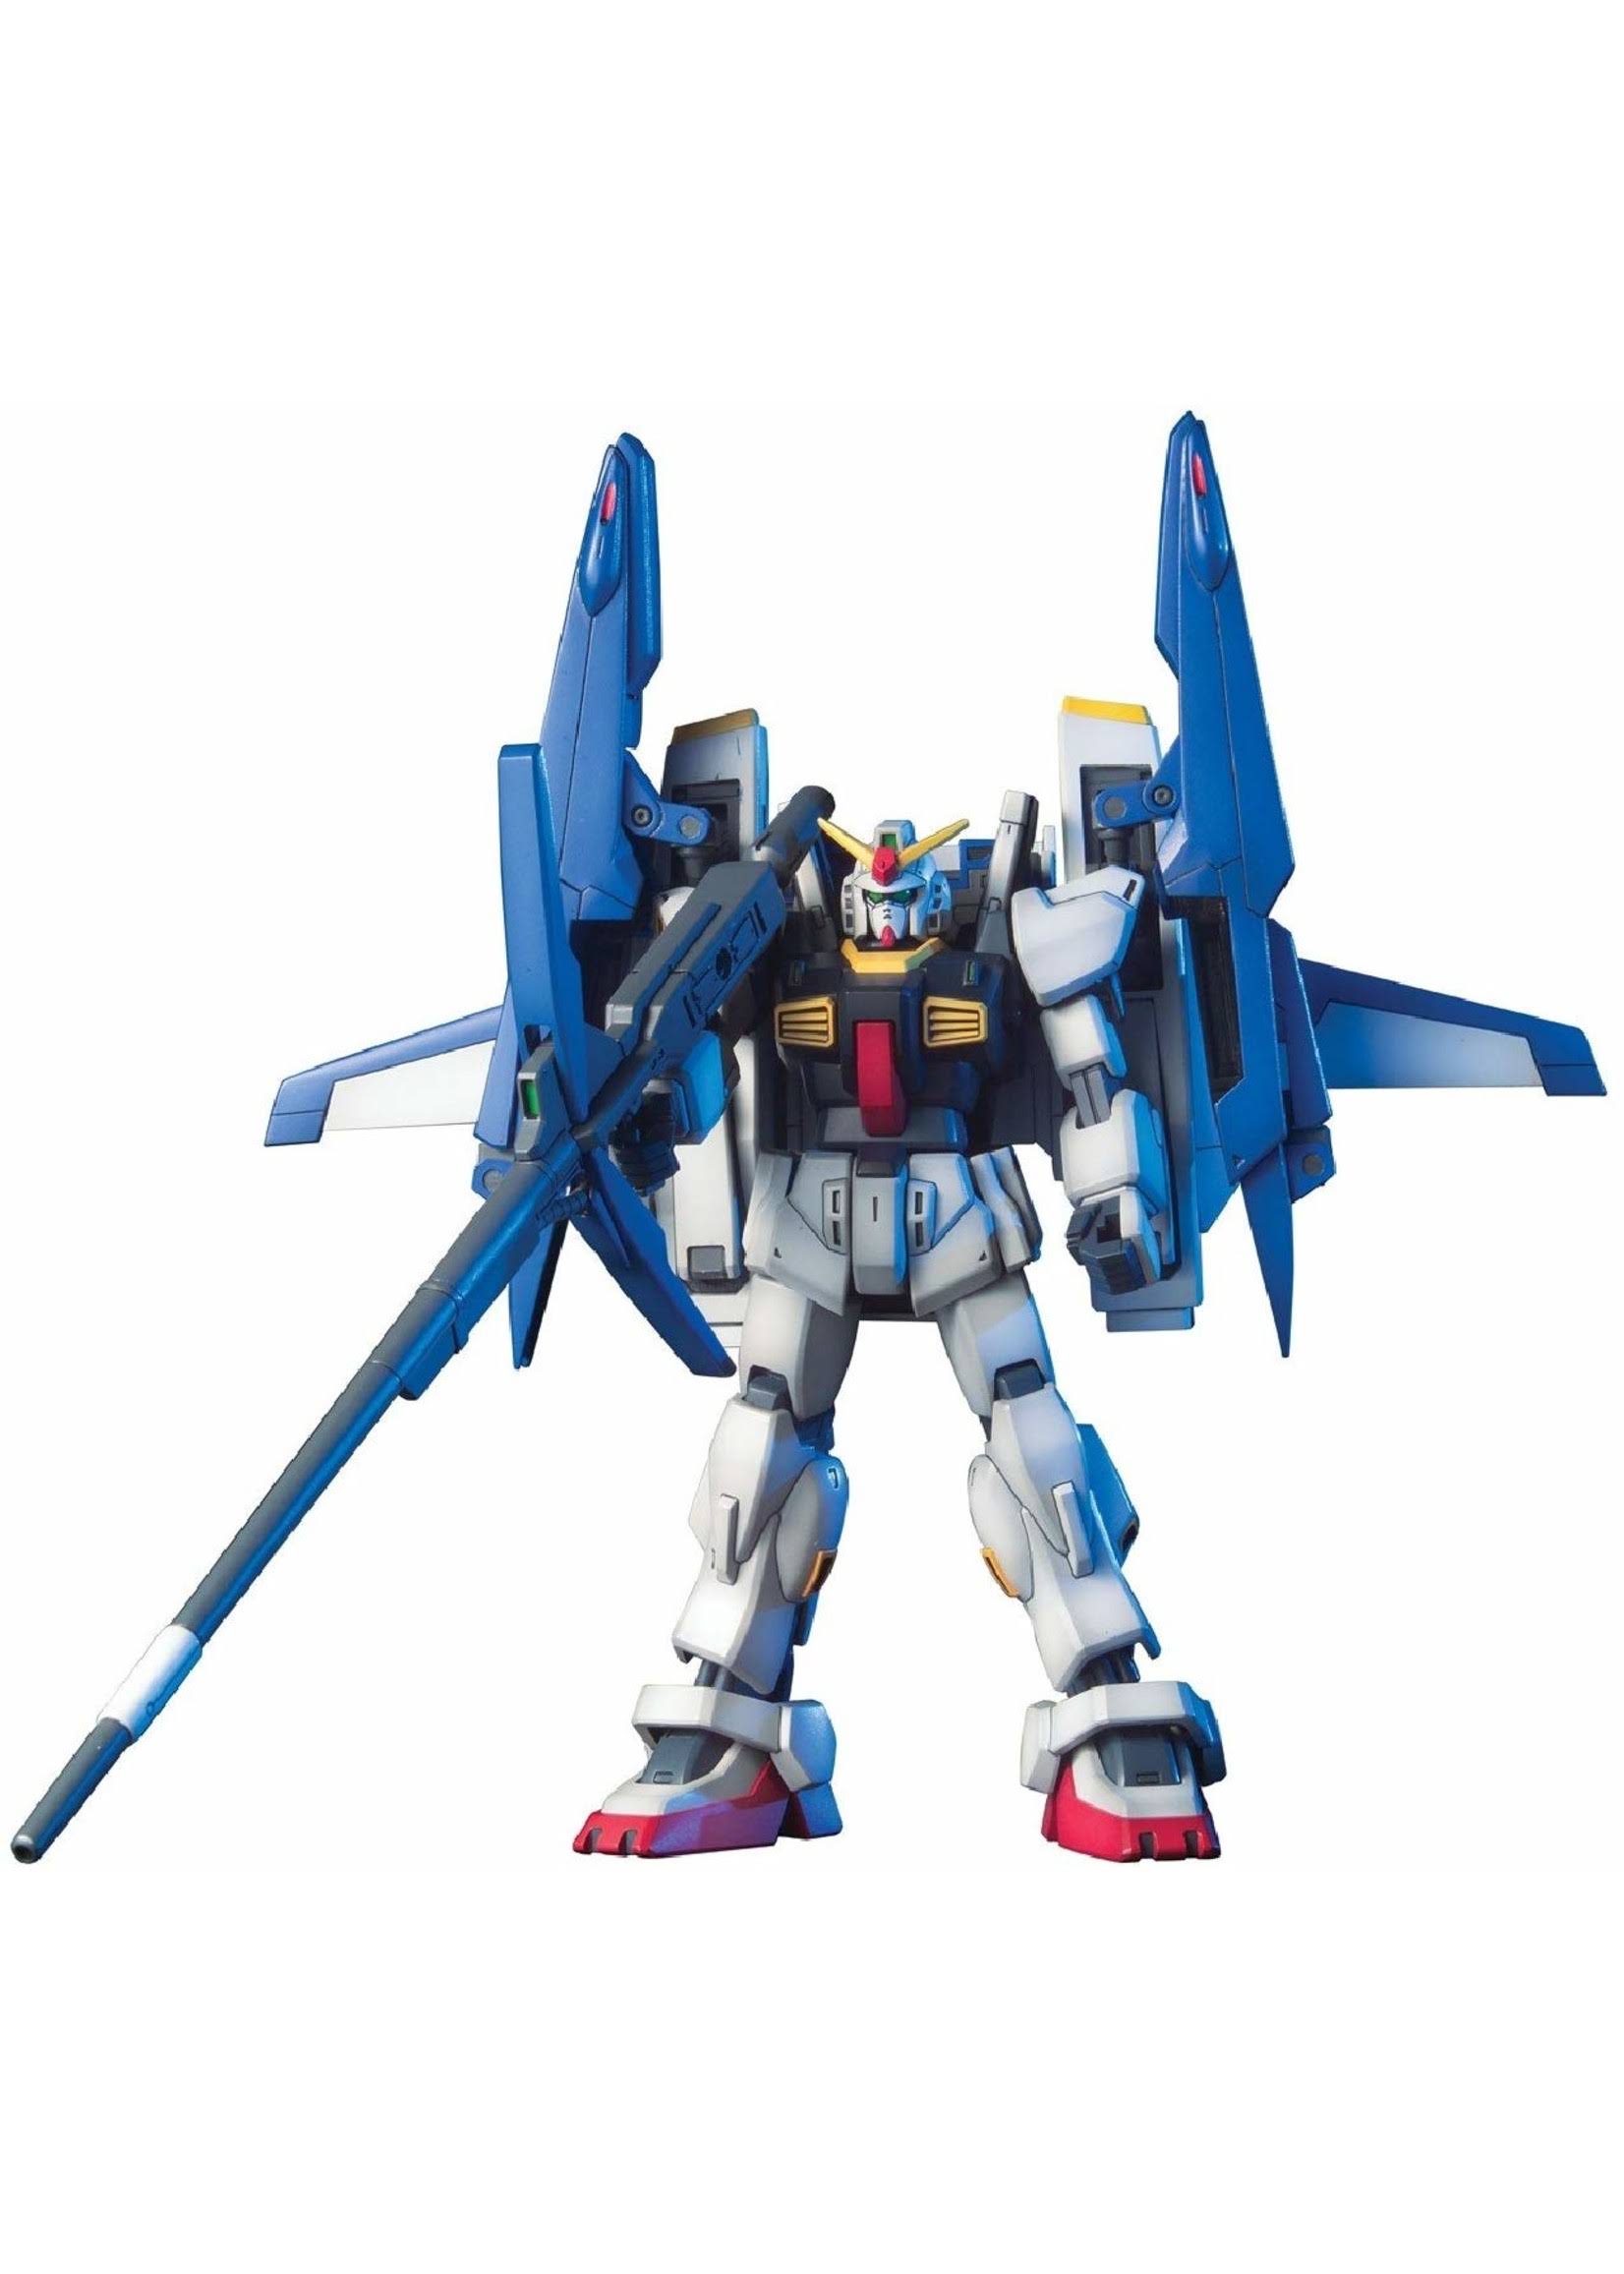 Bandai HGUC Mobile Suit Z Gundam Super Gundam Model Kit - 1:144 Scale